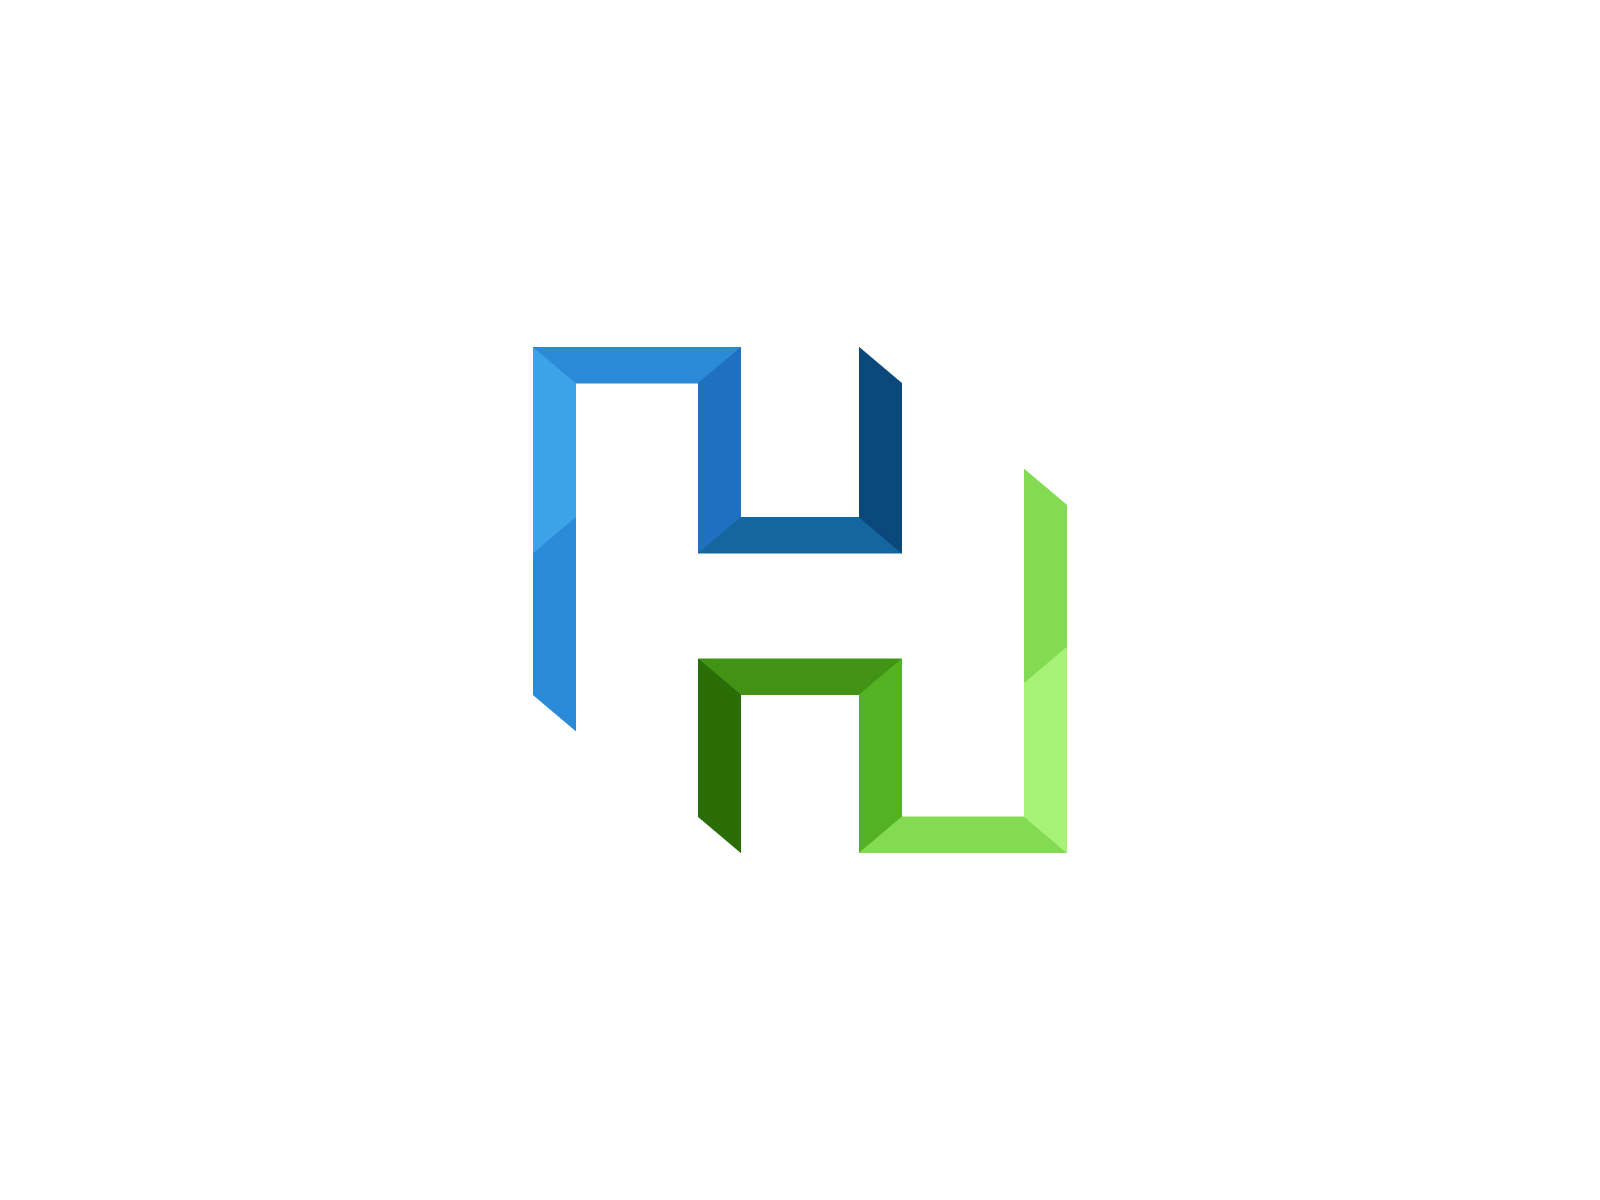 Logo Concept for the Alphabet H by Divjot Singh on Dribbble